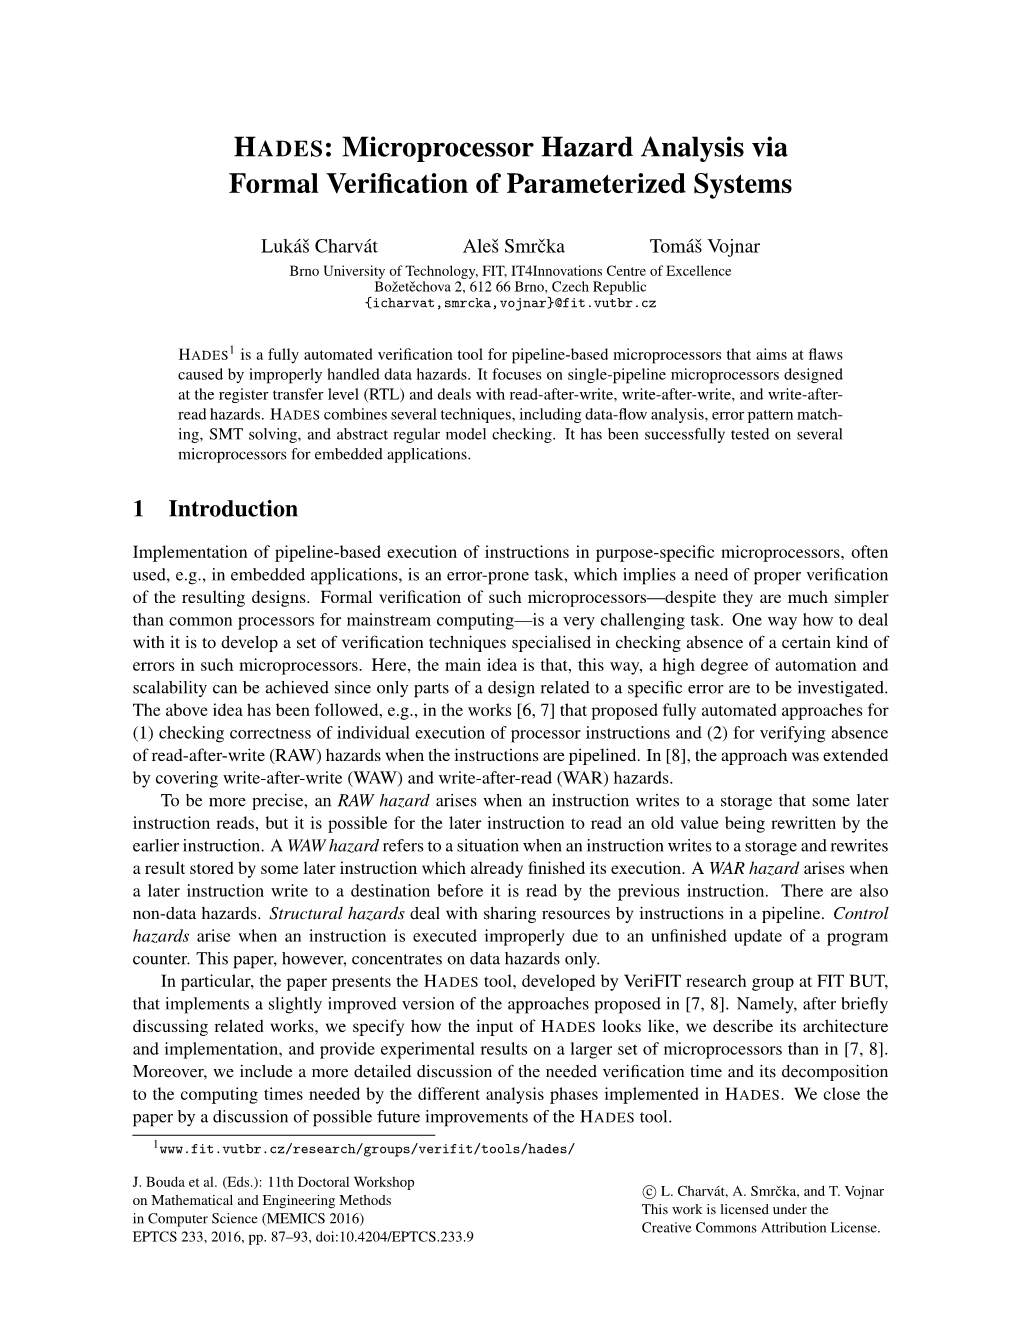 HADES: Microprocessor Hazard Analysis Via Formal Verification Of